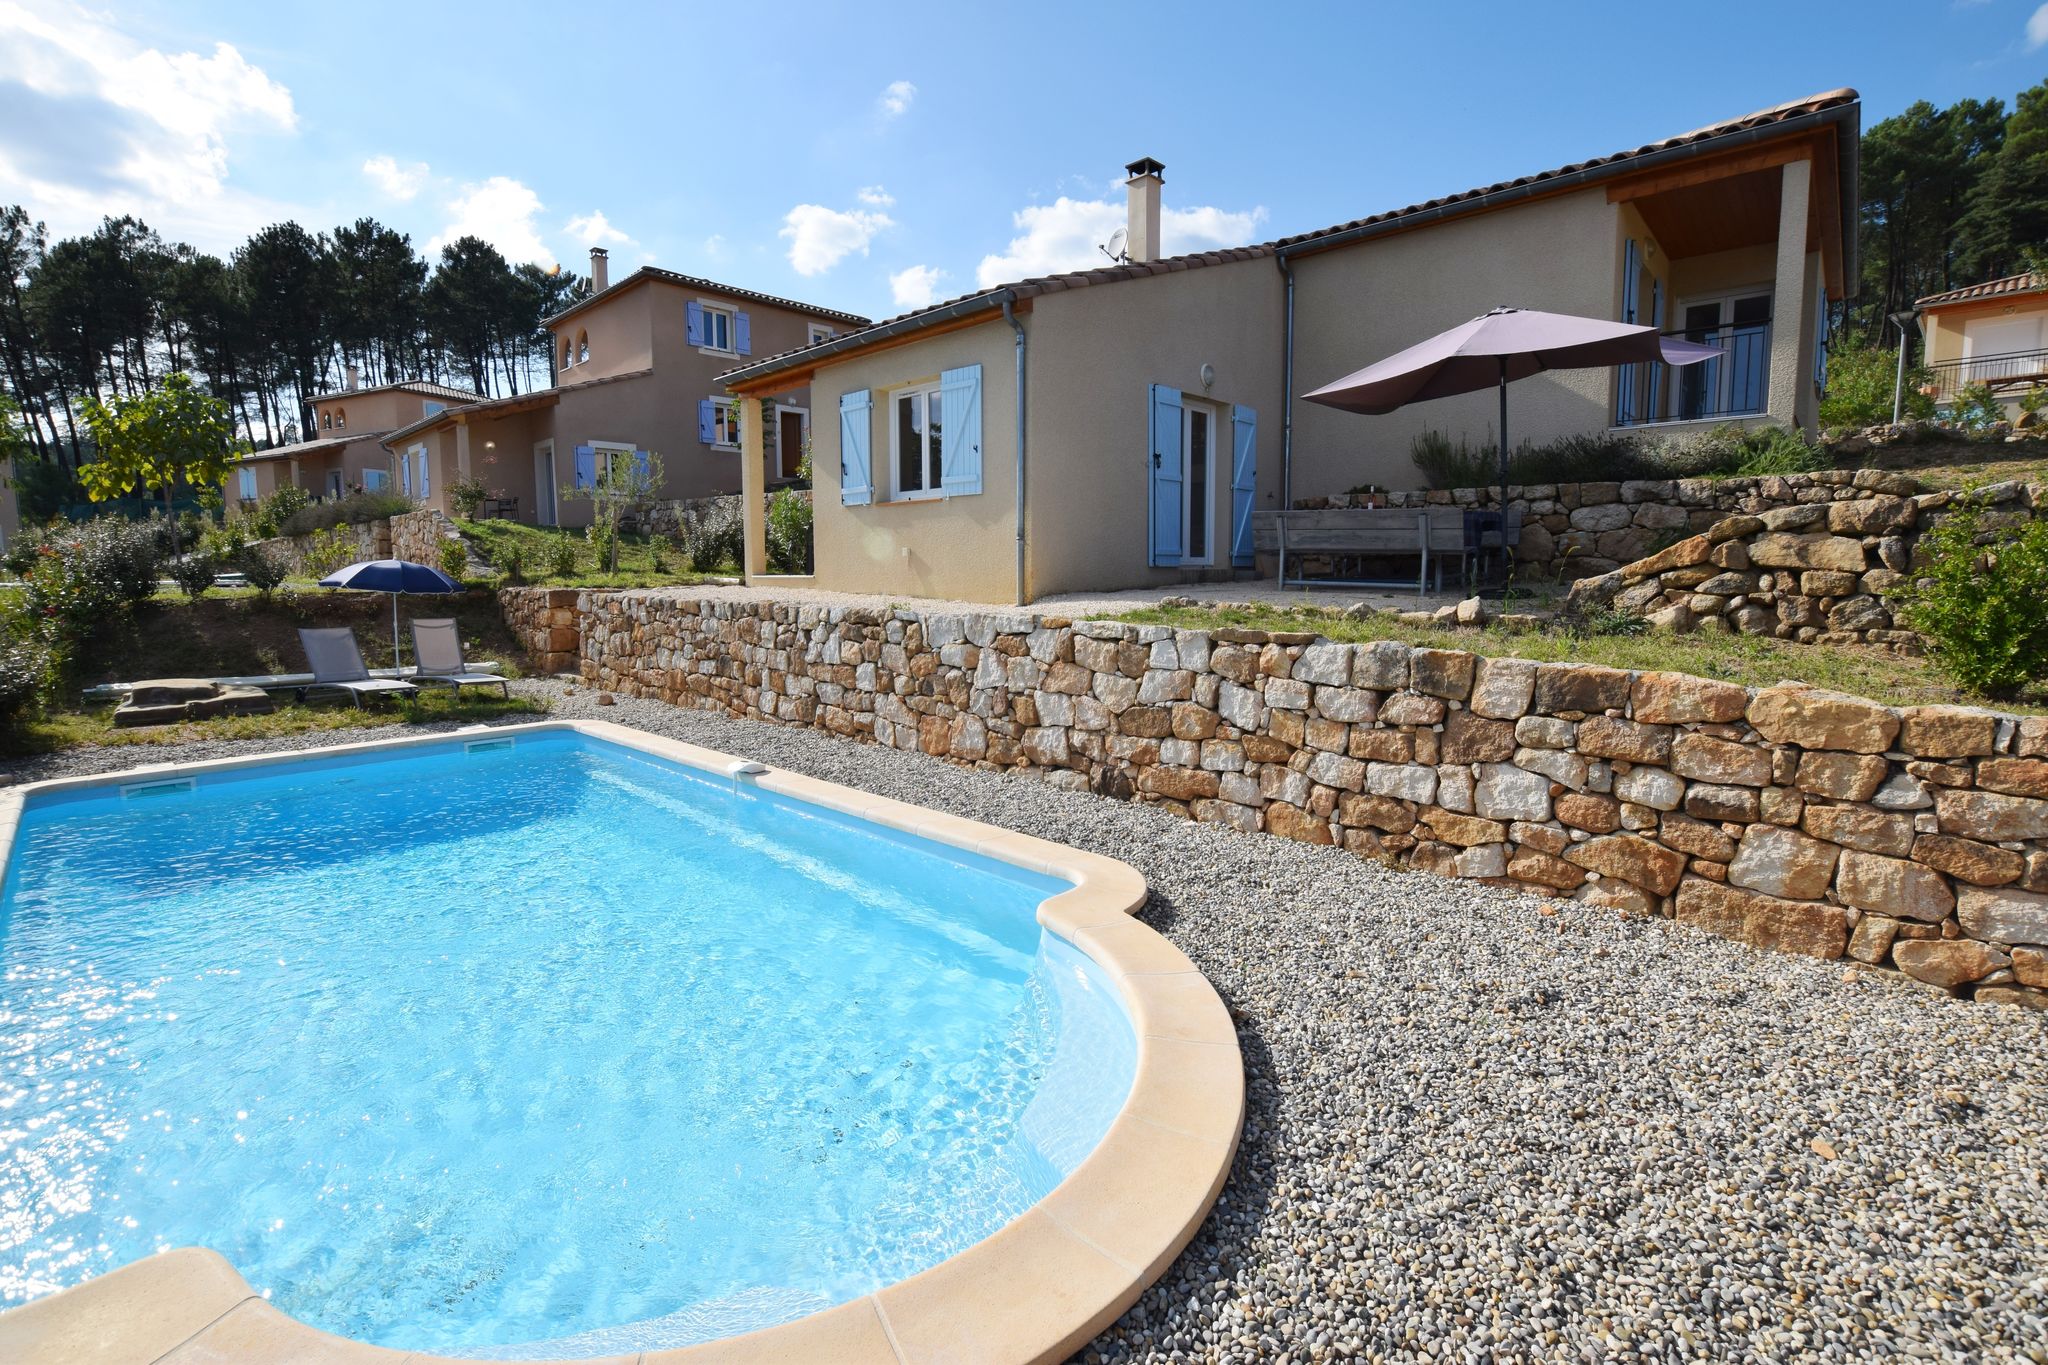 Charmante villa in Joyeuse Frankrijk met privézwembad